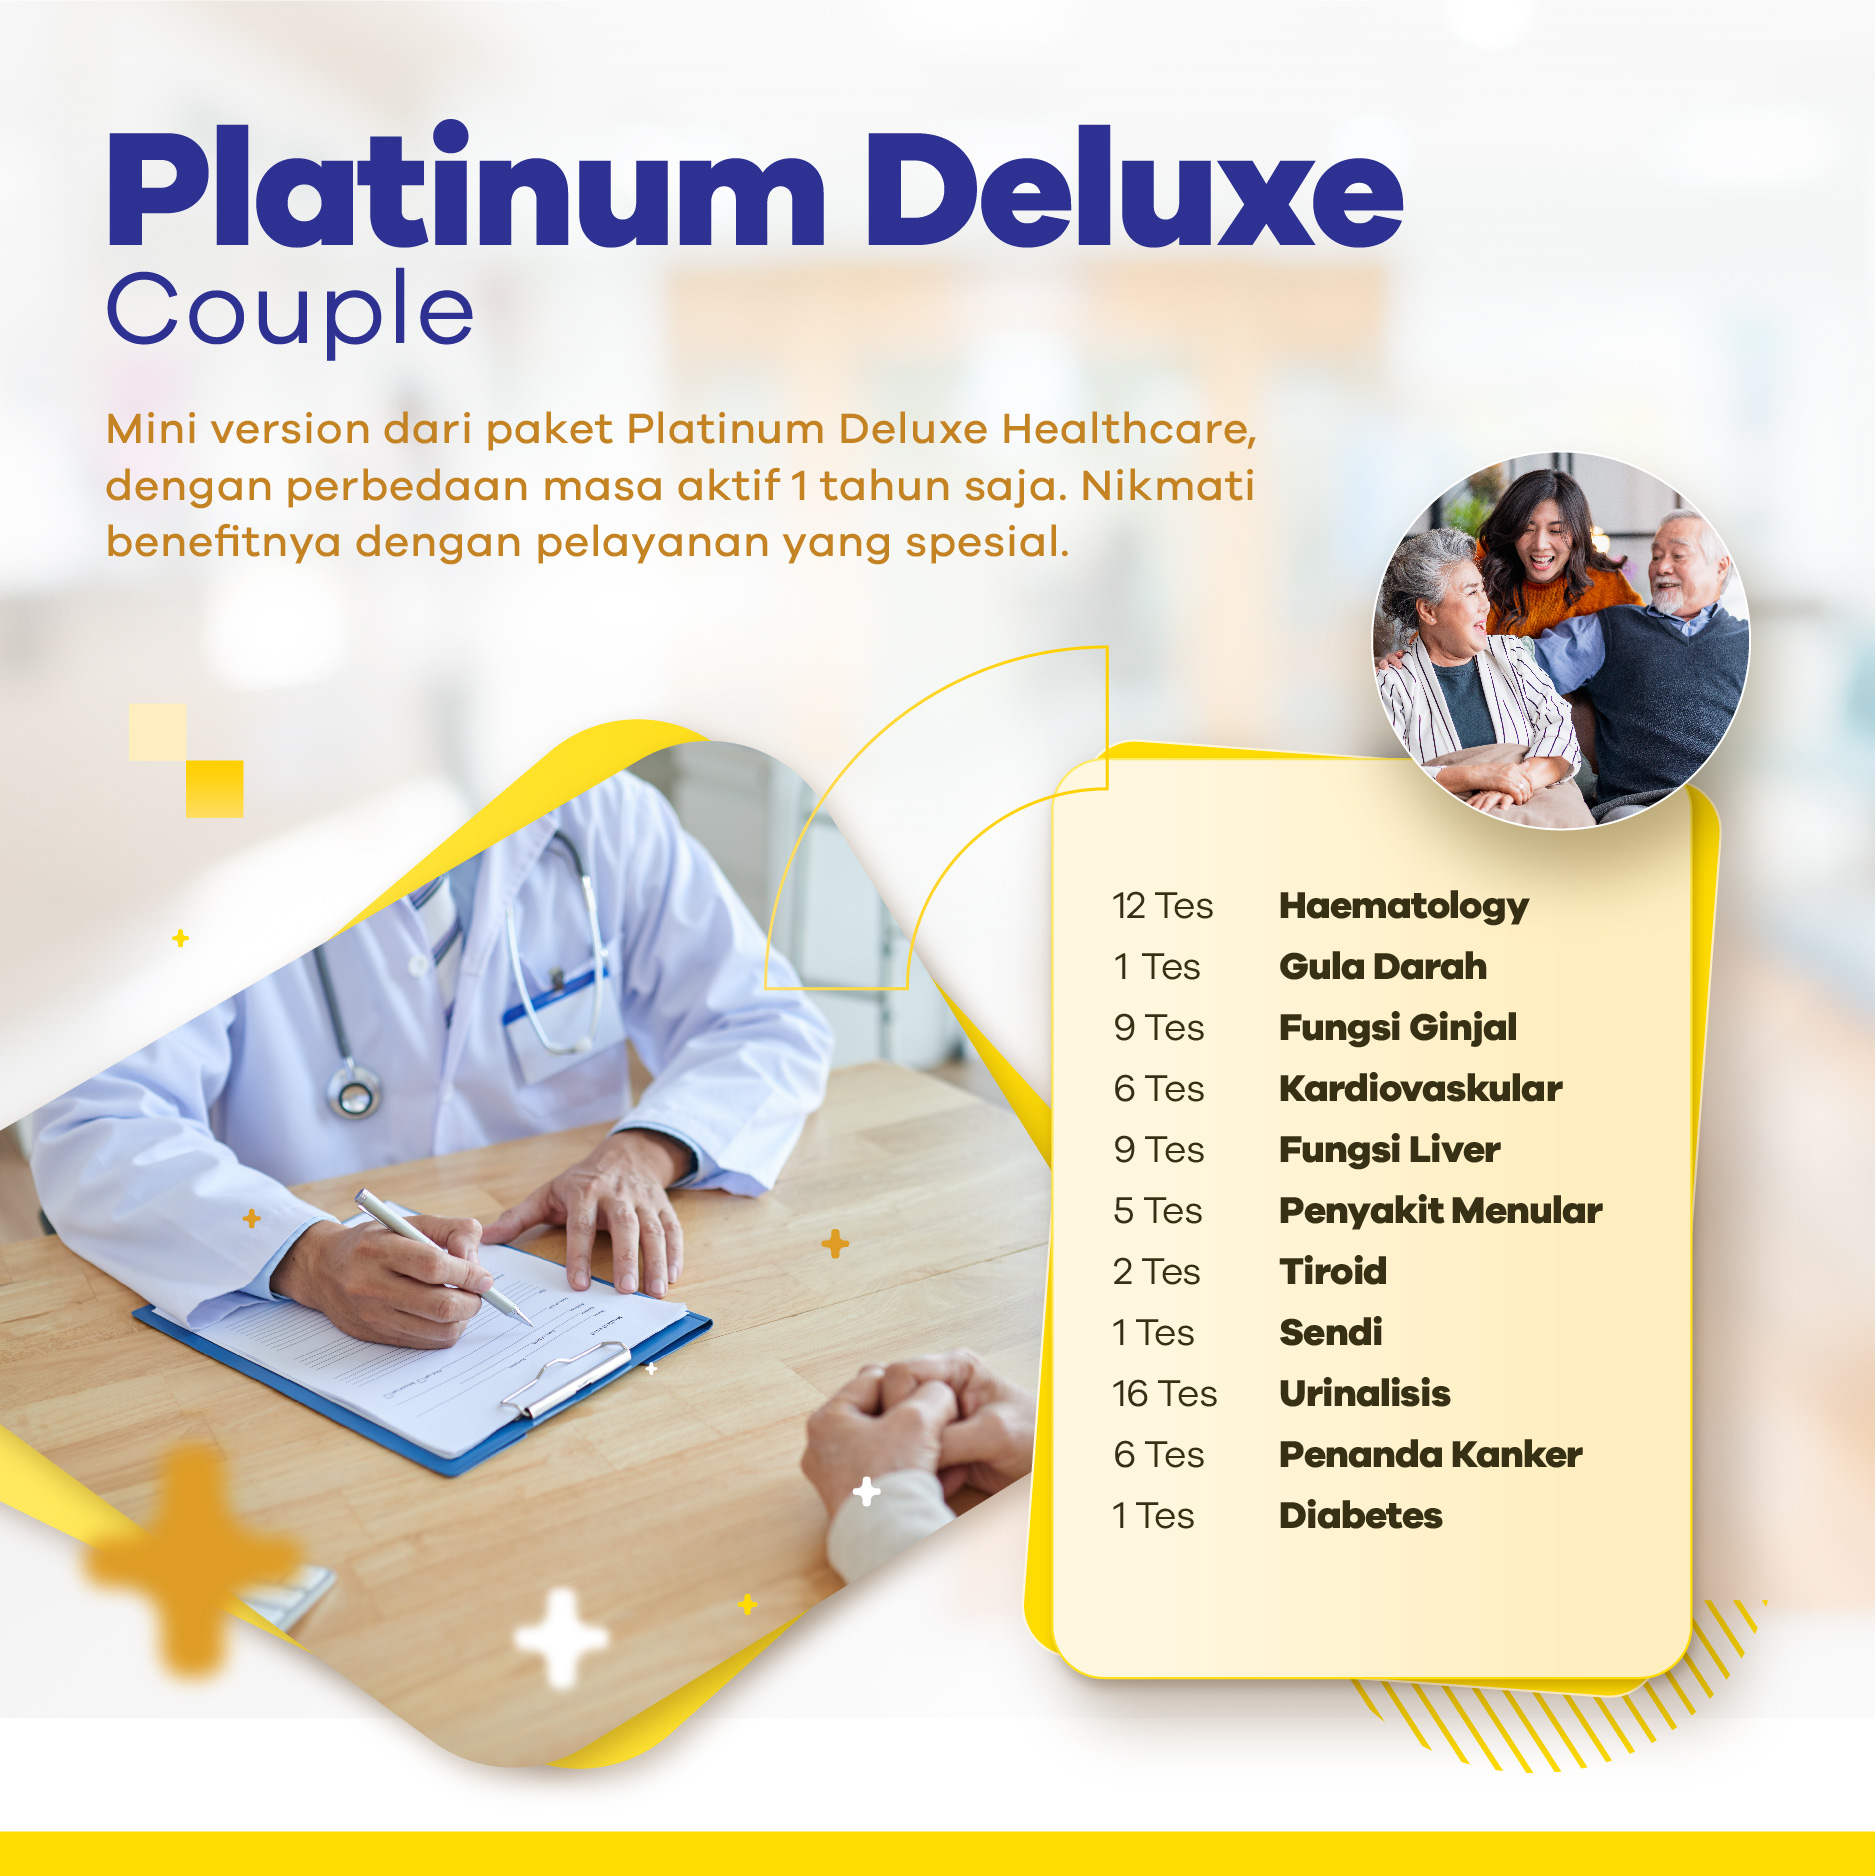 Platinum Deluxe Couple